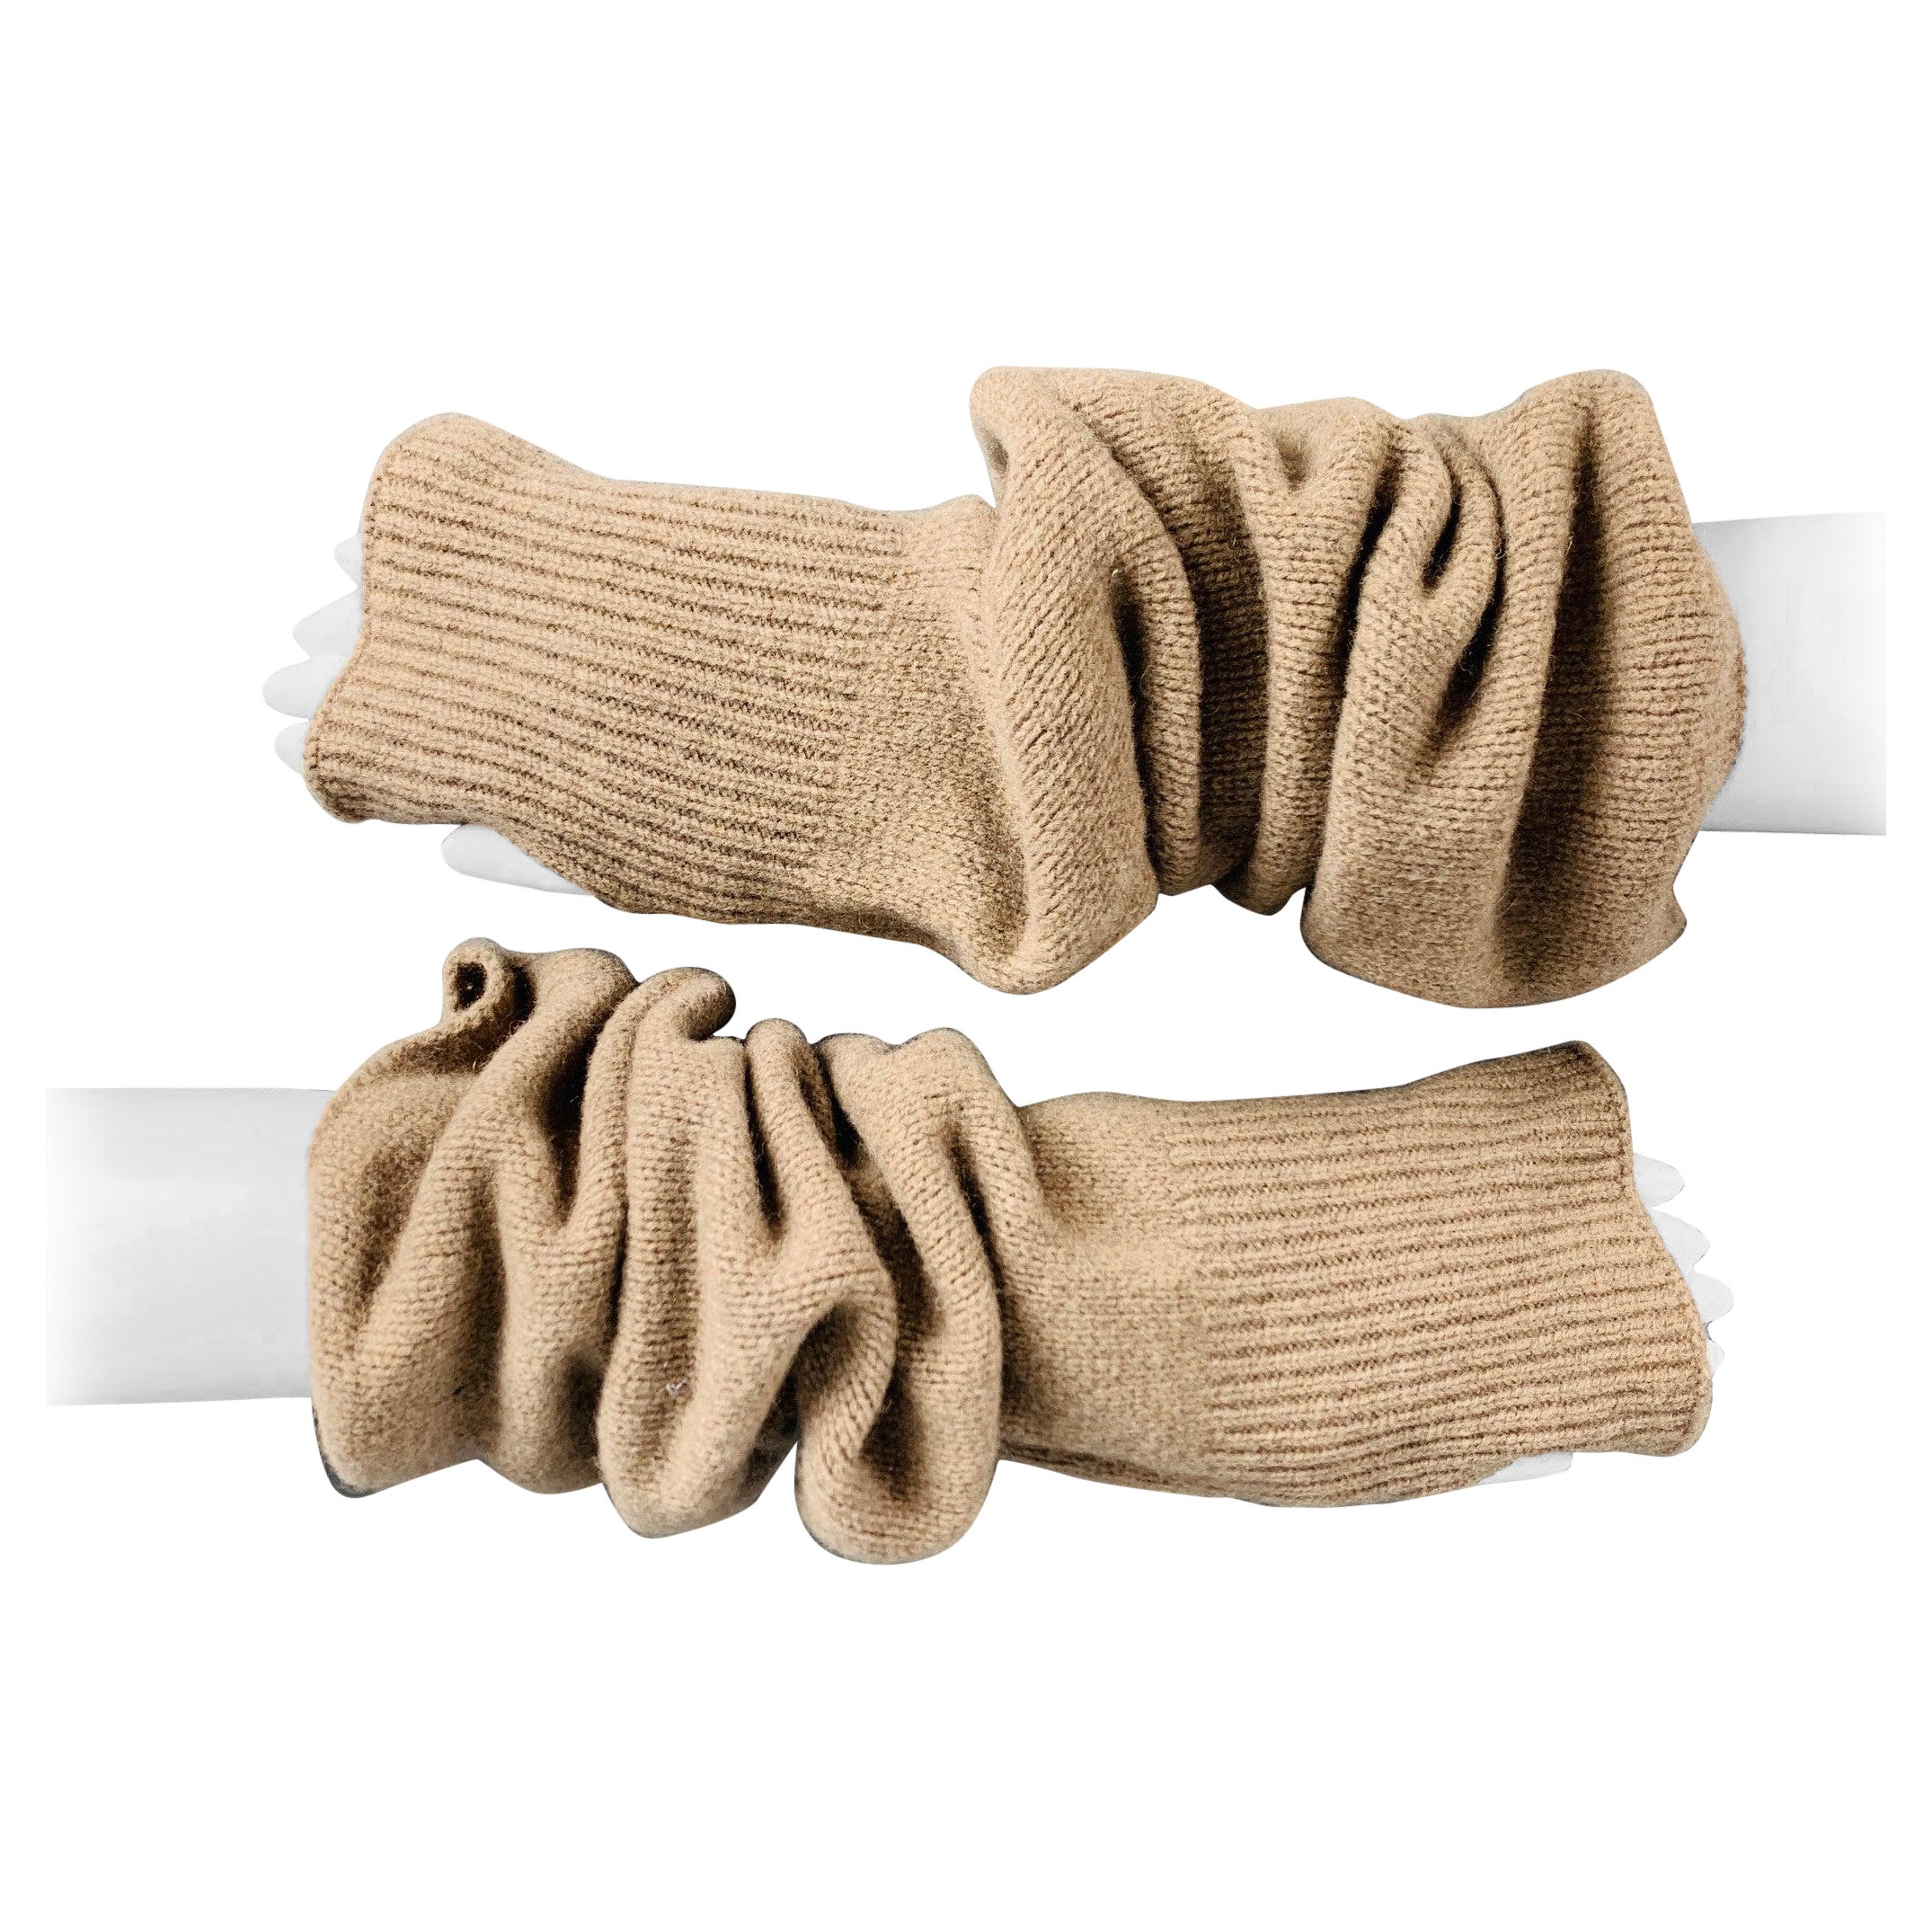 MARC JACOBS Graue Taupe gestrickte Handschuhe aus Woll-Kaschmirmischung im Angebot